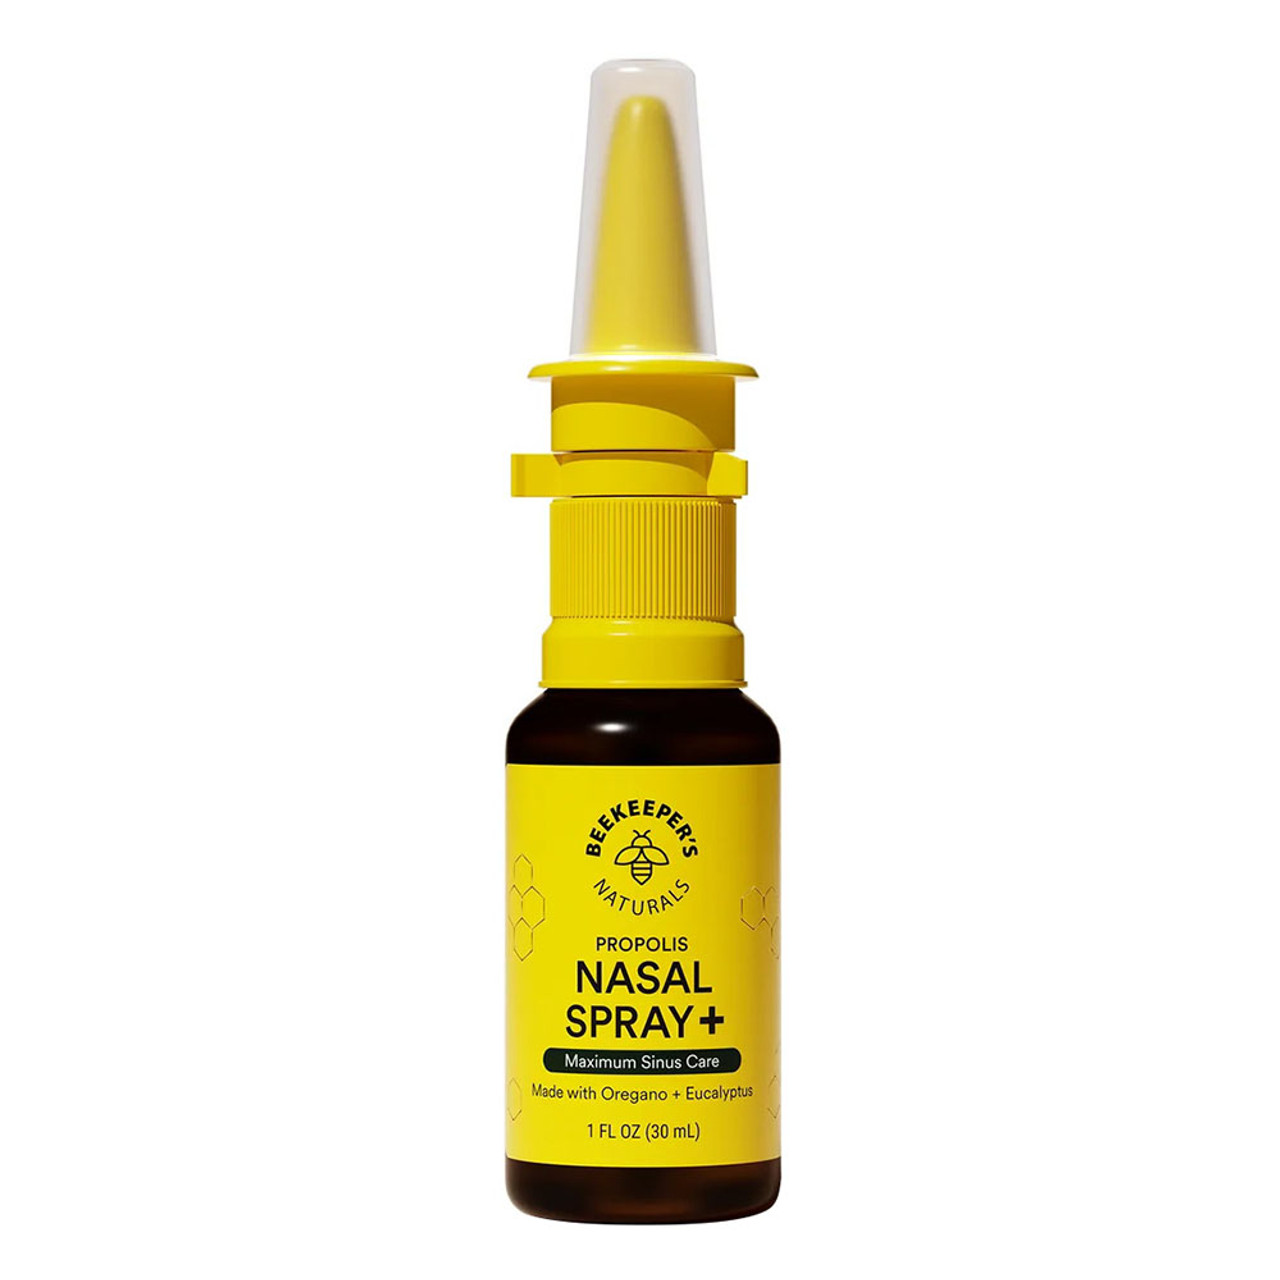 Beekeepers Naturals Propolis Nasal Spray Plus for Maximum Sinus